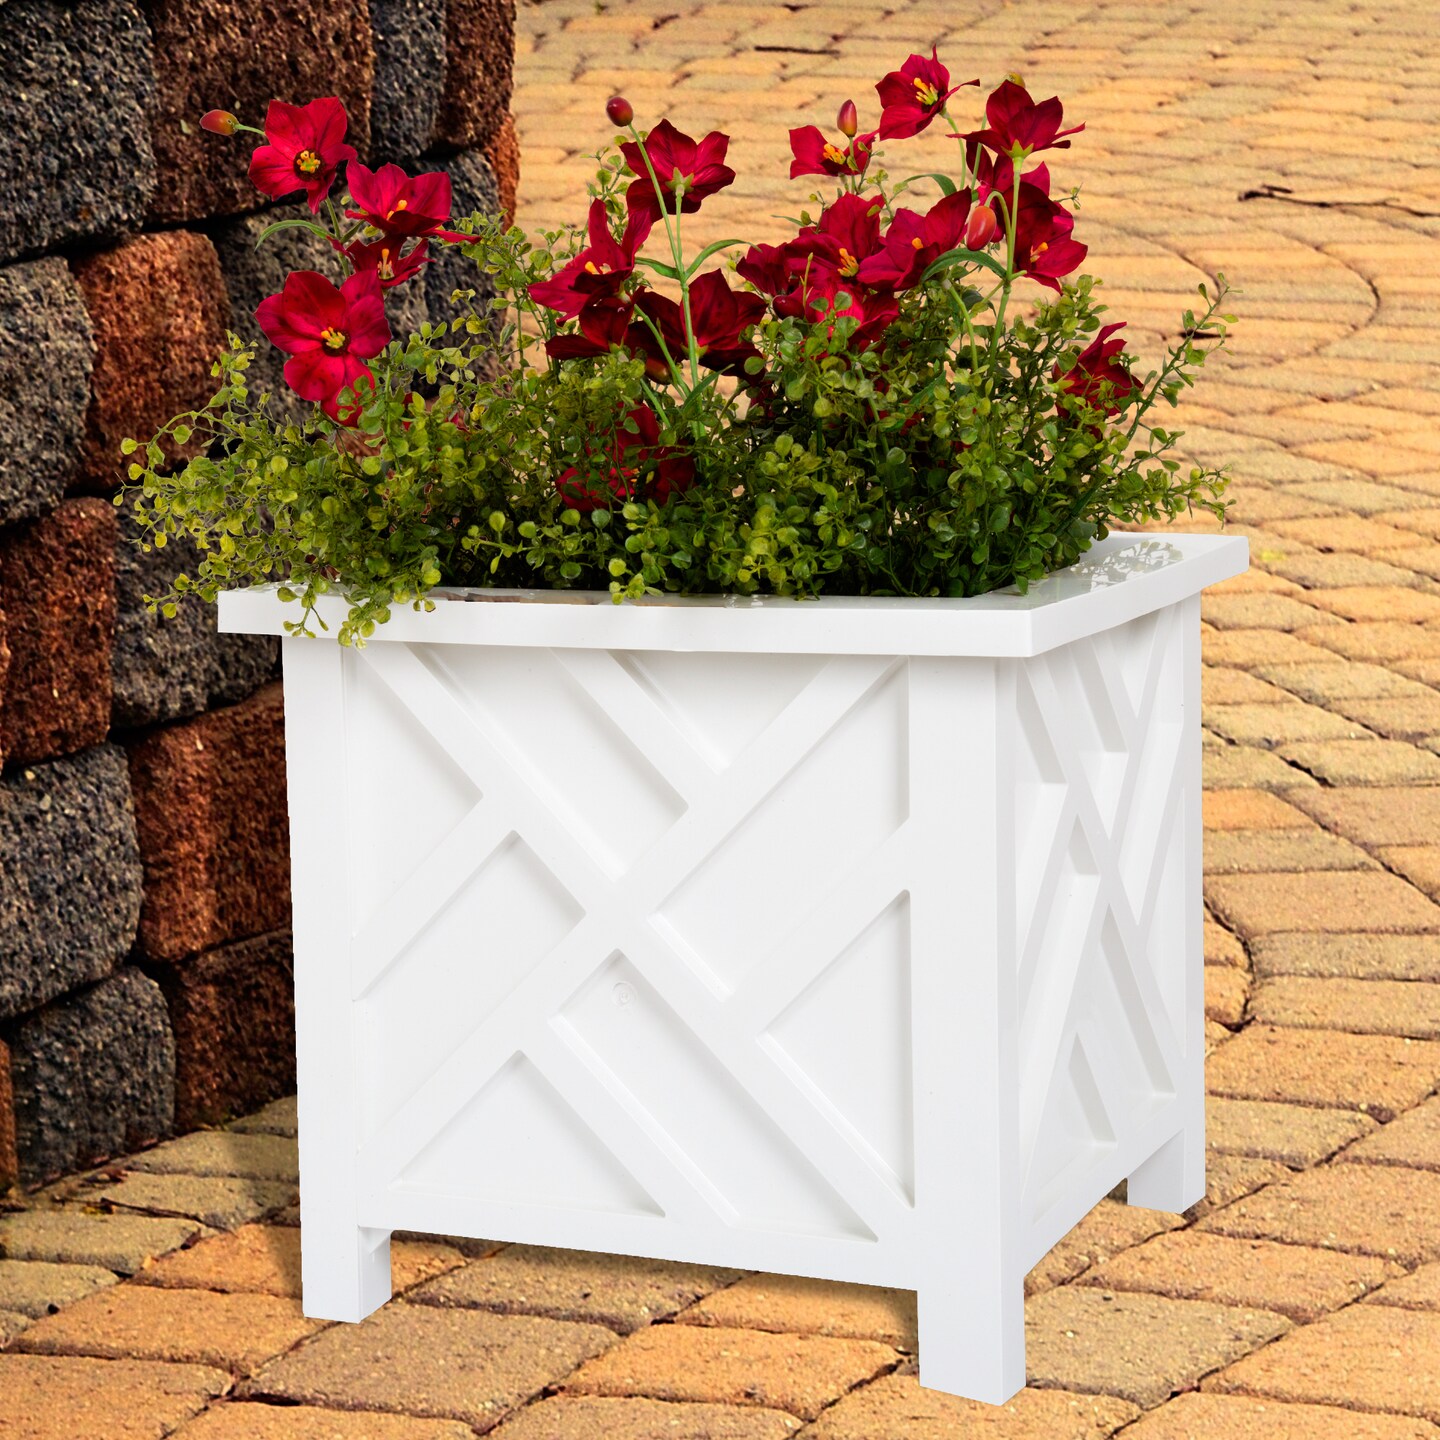 Pure Garden Plant Holder  Planter Container Box for Garden Patio and Lawn  Outdoor Decor